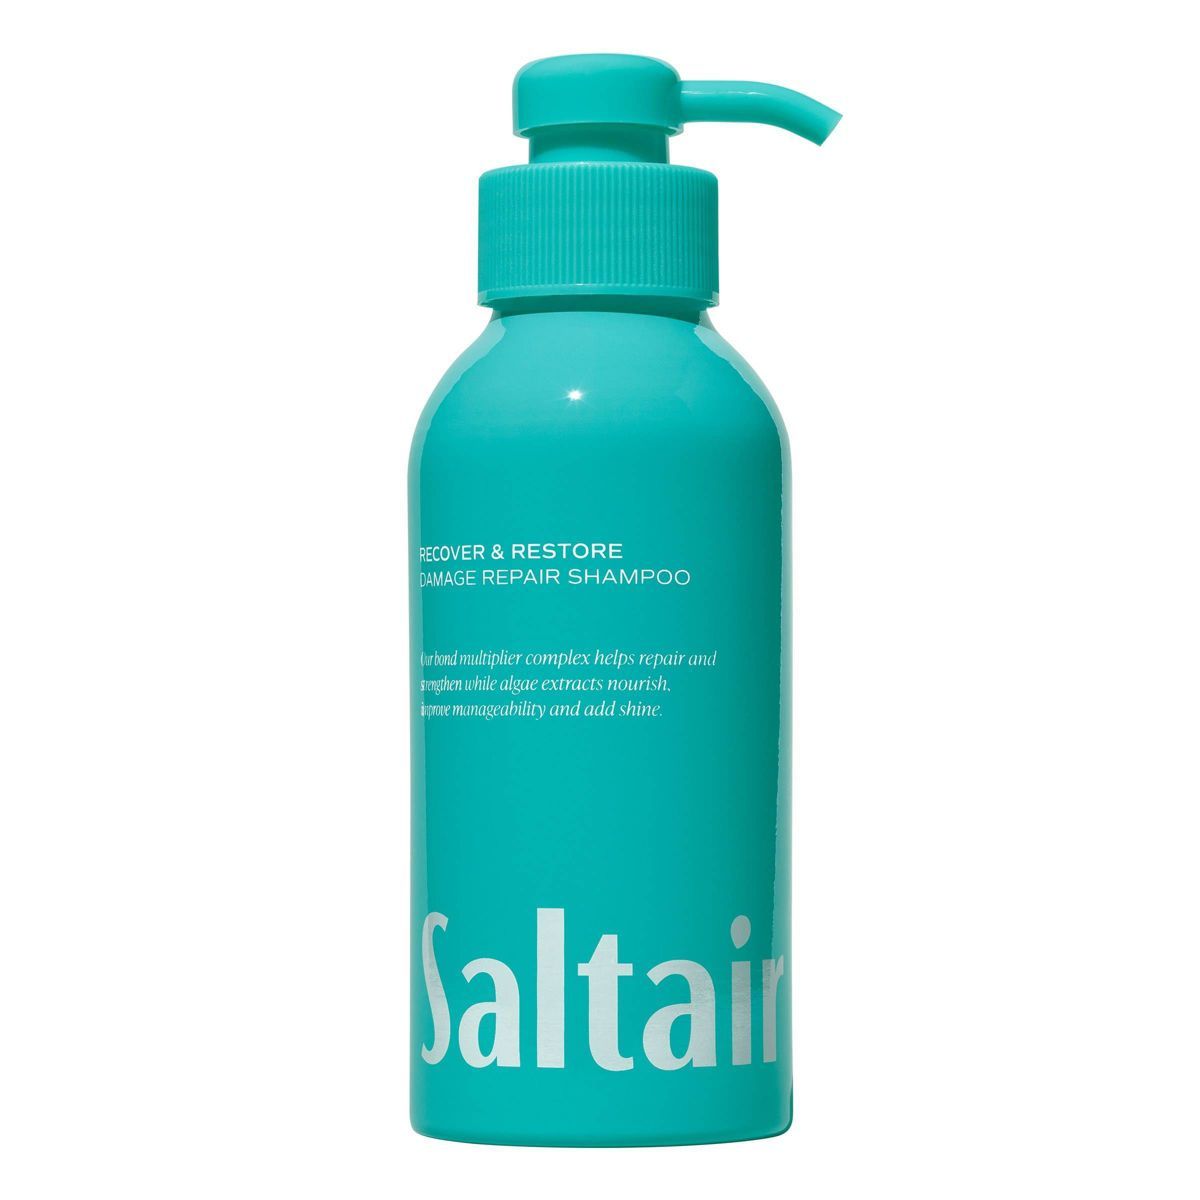 Saltair Recovery & Restore Damage Shampoo - 14 fl oz | Target